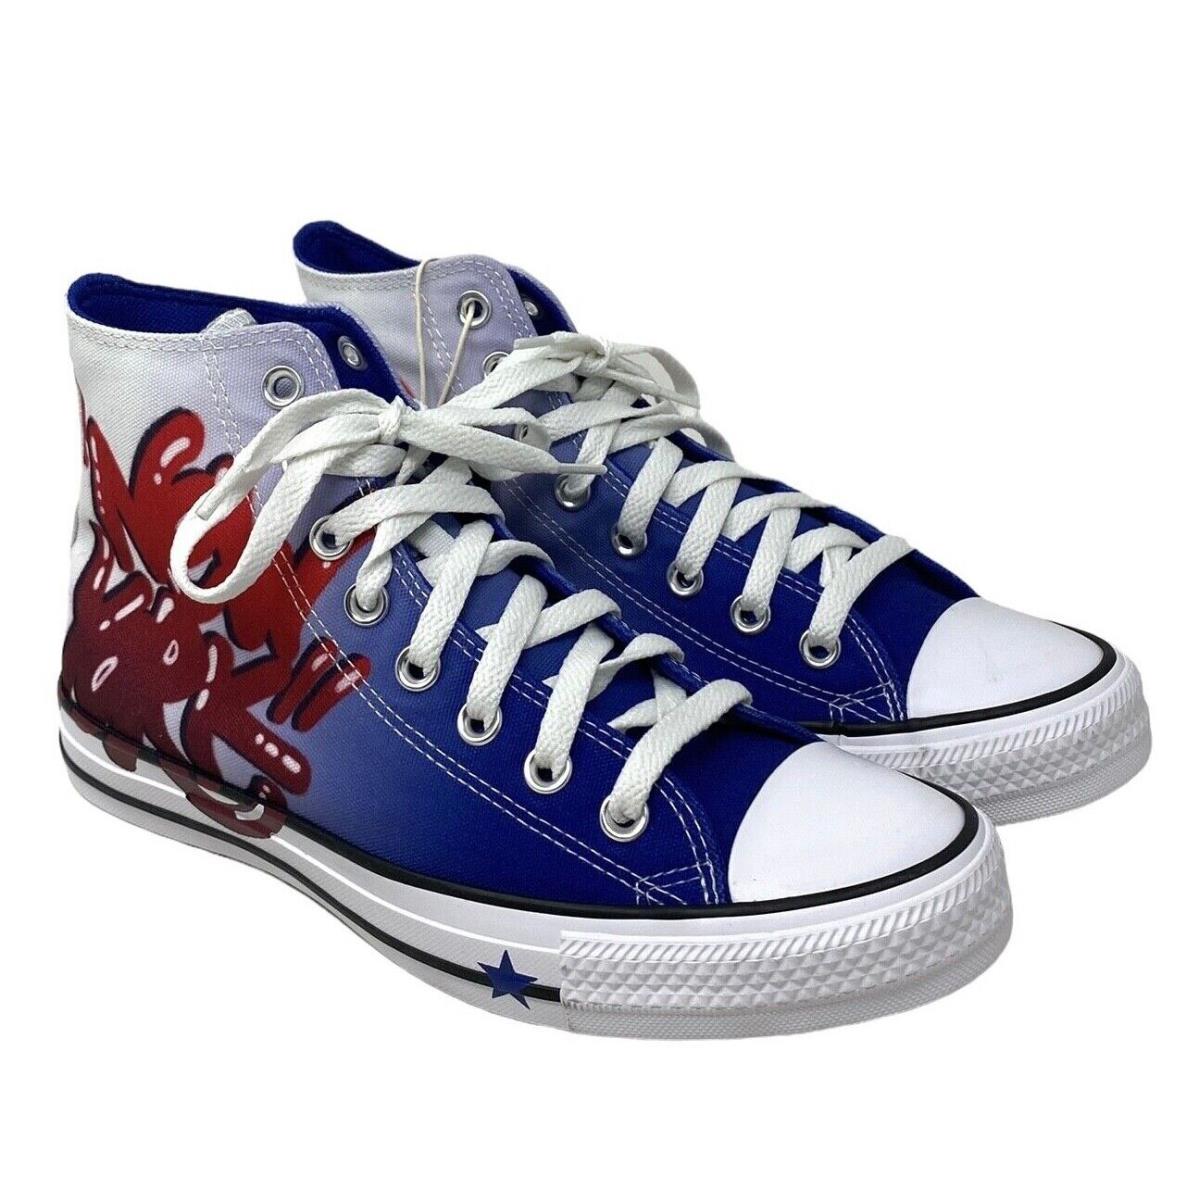 Converse Ctas High Top Shoes Canvas Skate Sneaker For Women Blue White A04167C